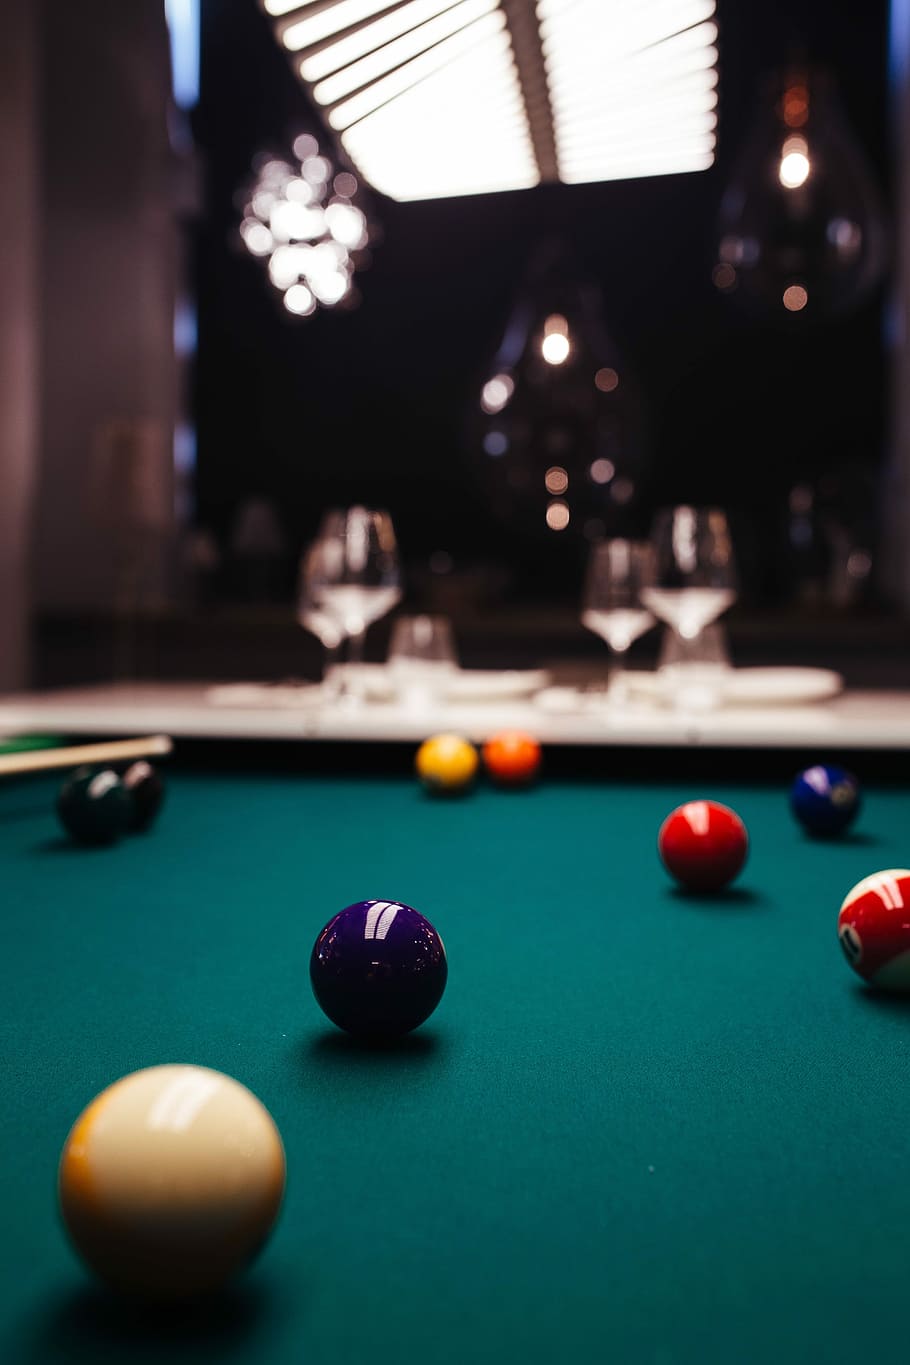 green, table, billiard cue, Billiard balls, green table, nobody, time, hobby, balls, game